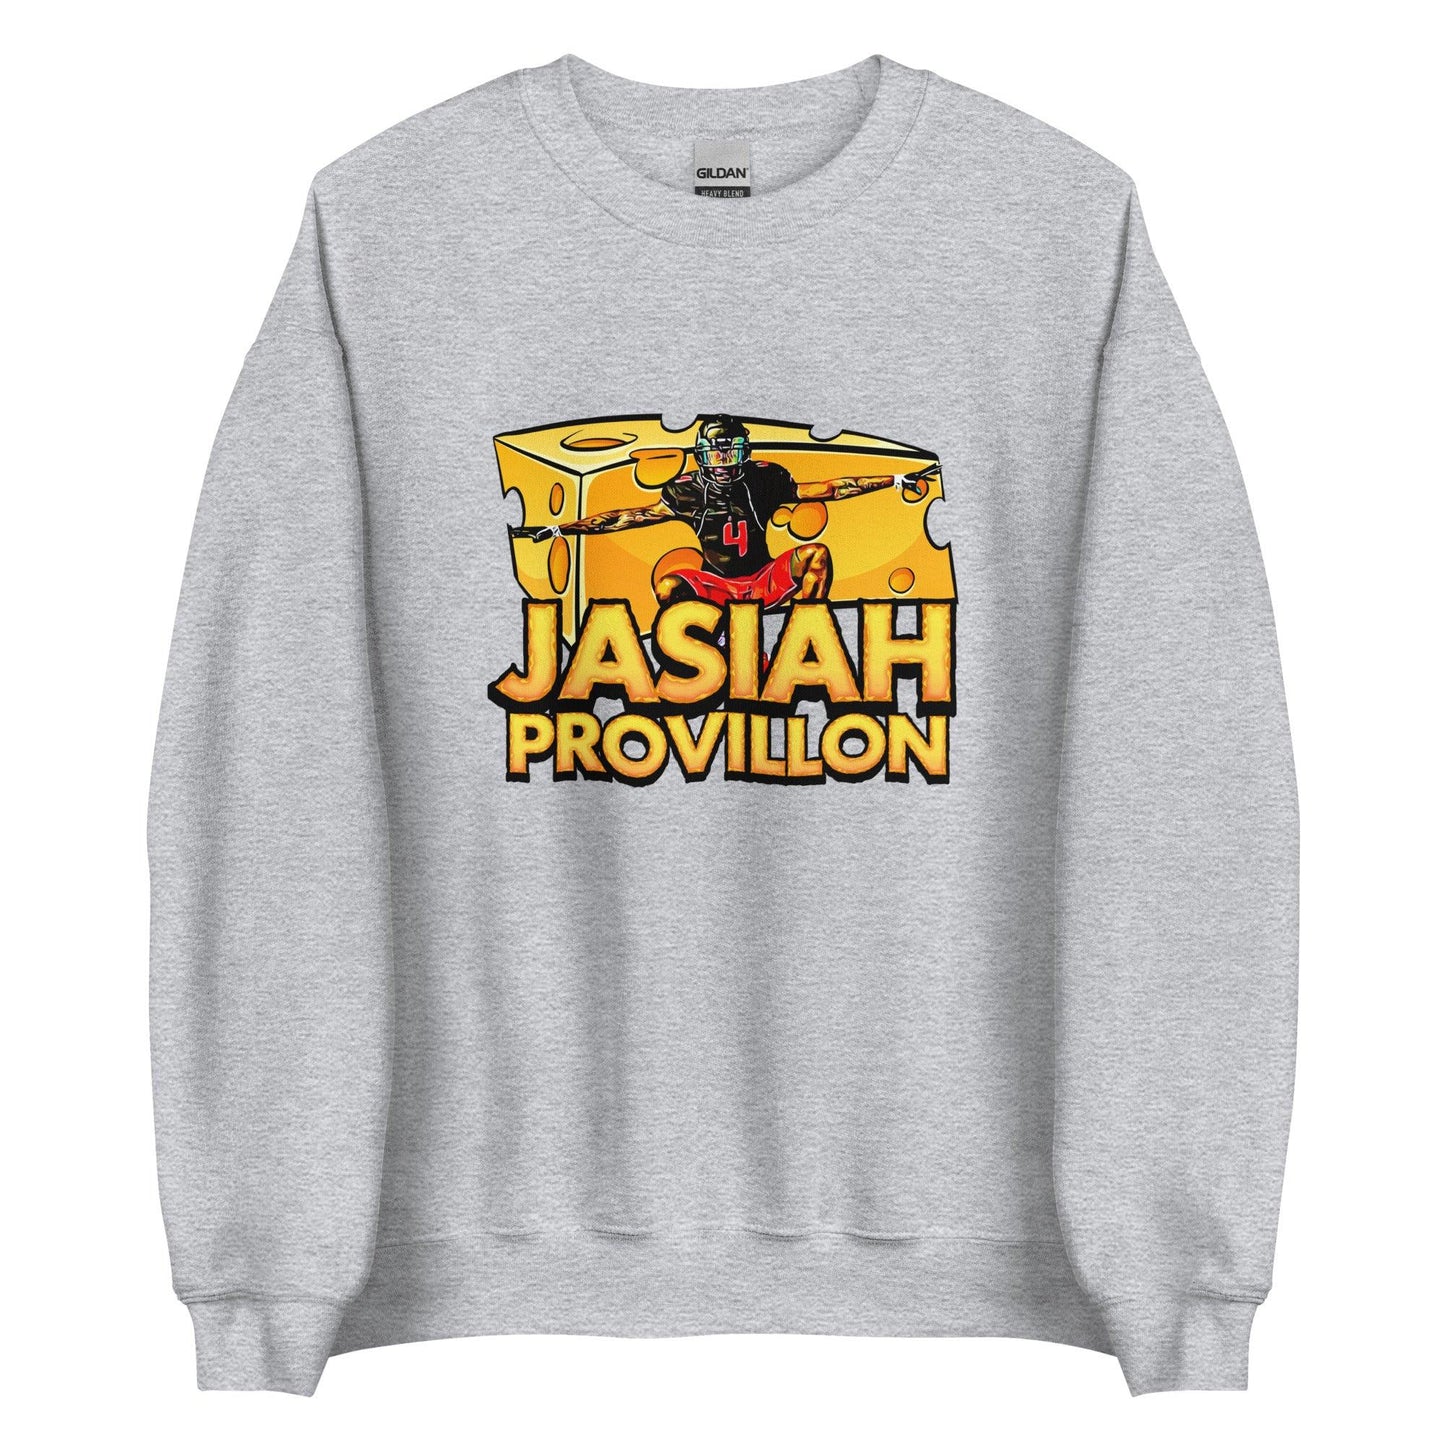 Jasiah Provillon "Cheese" Sweatshirt - Fan Arch